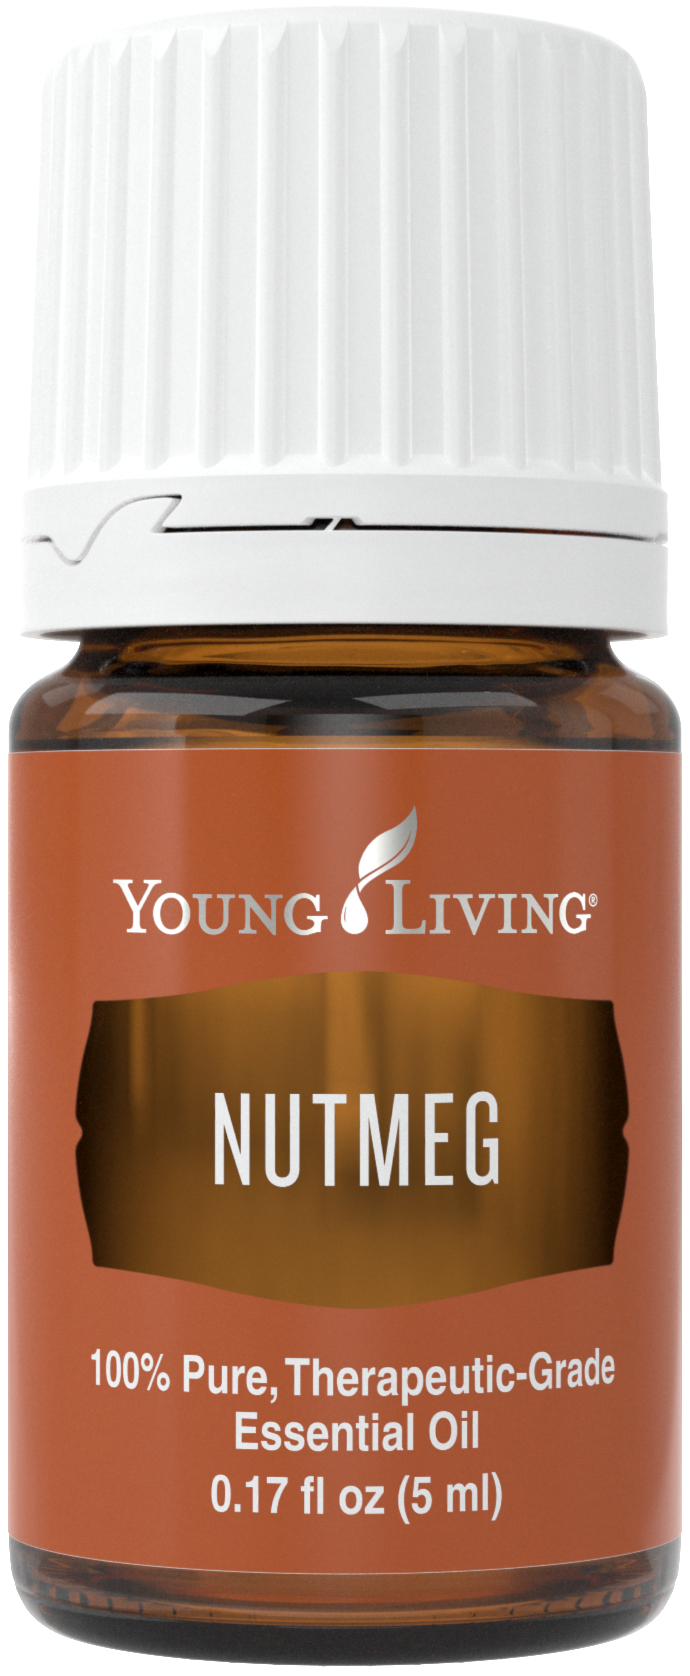 Nutmeg young living manfaat